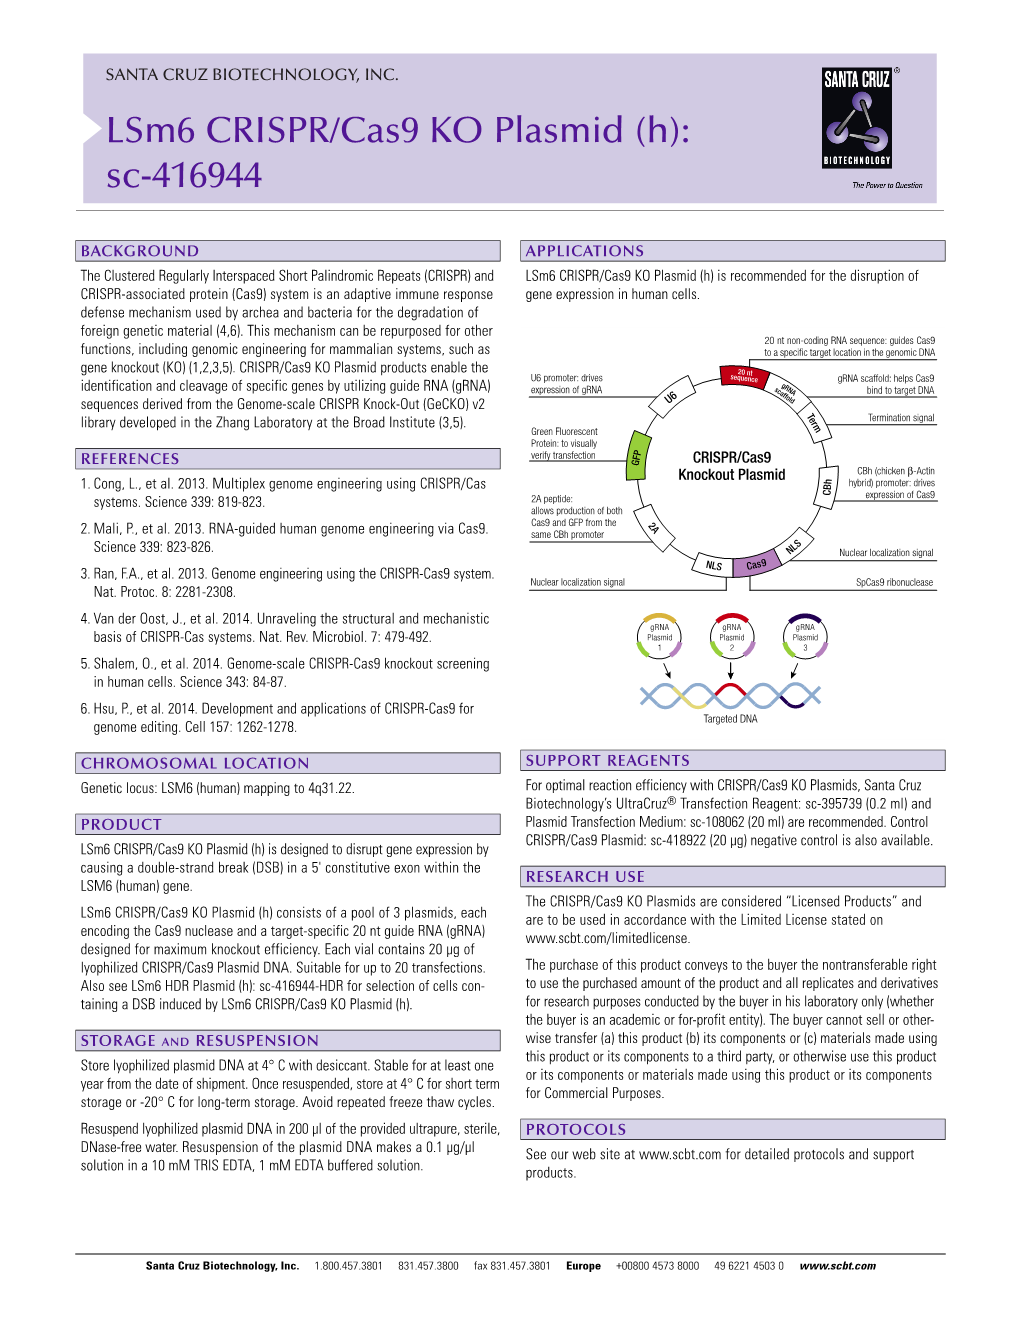 Lsm6 CRISPR/Cas9 KO Plasmid (H): Sc-416944